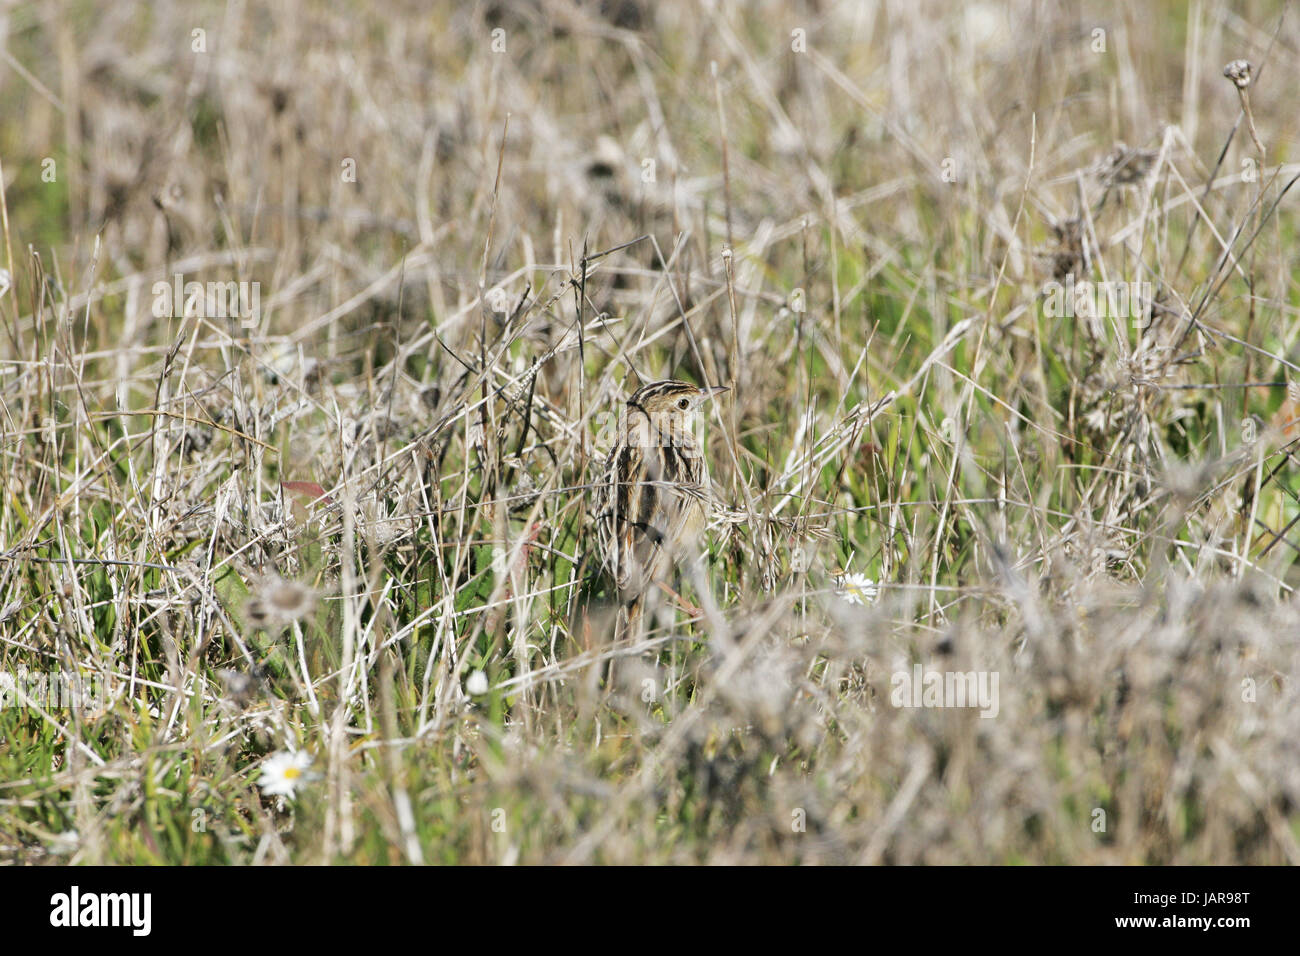 Zitting cisticola Cisticola juncidis skulking amongst vegetation Stock Photo